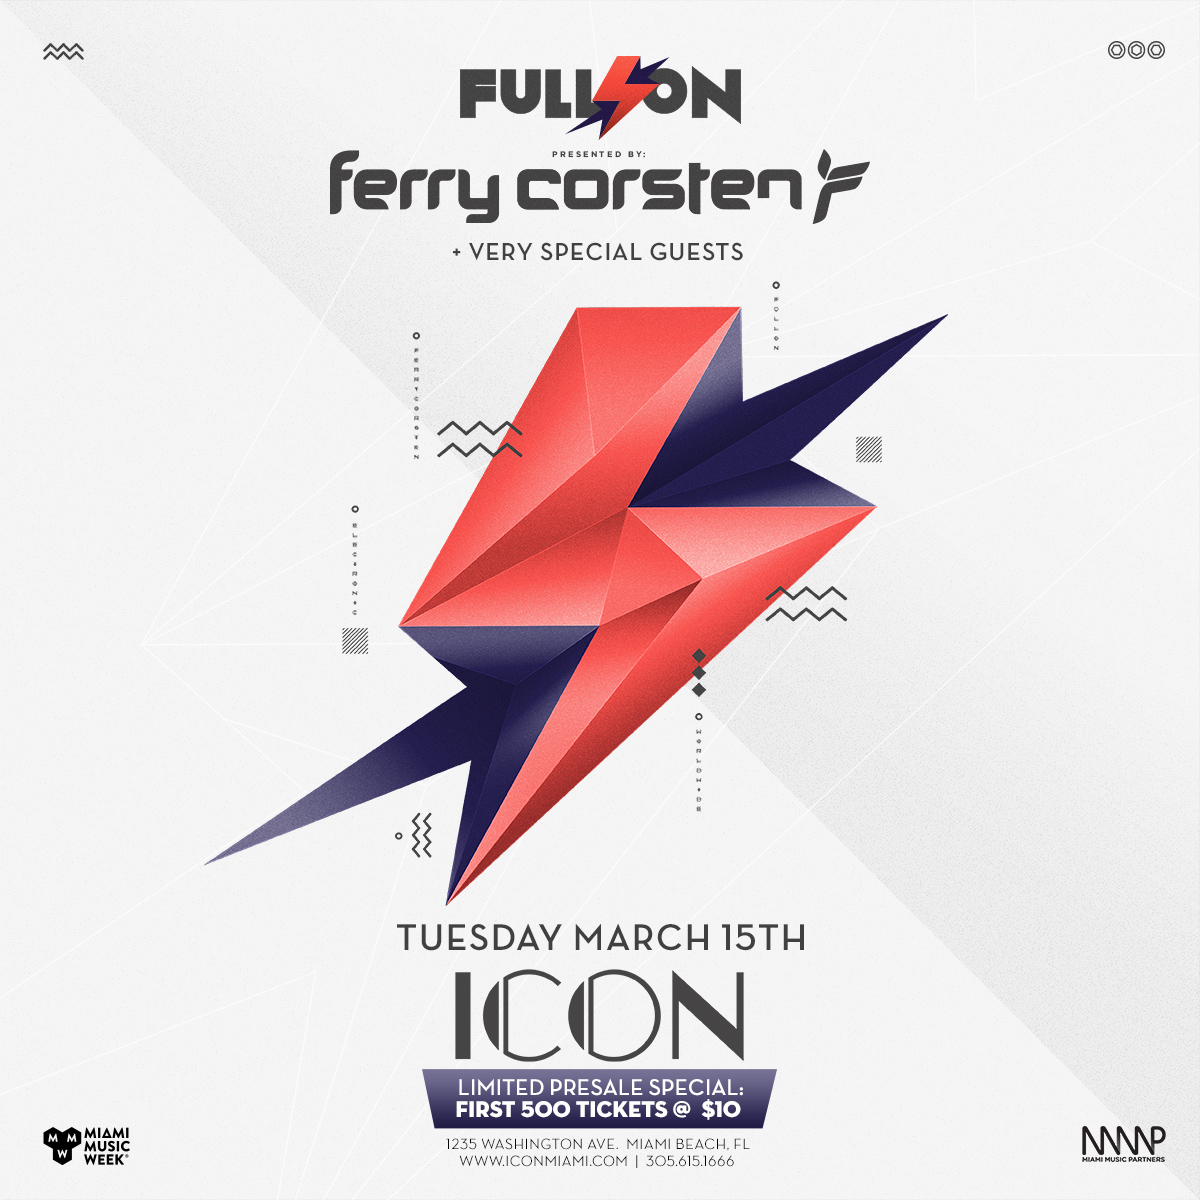 Ferry Corsten Presents FULL ON - Miami Music Week - 1200 x 1200 jpeg 497kB